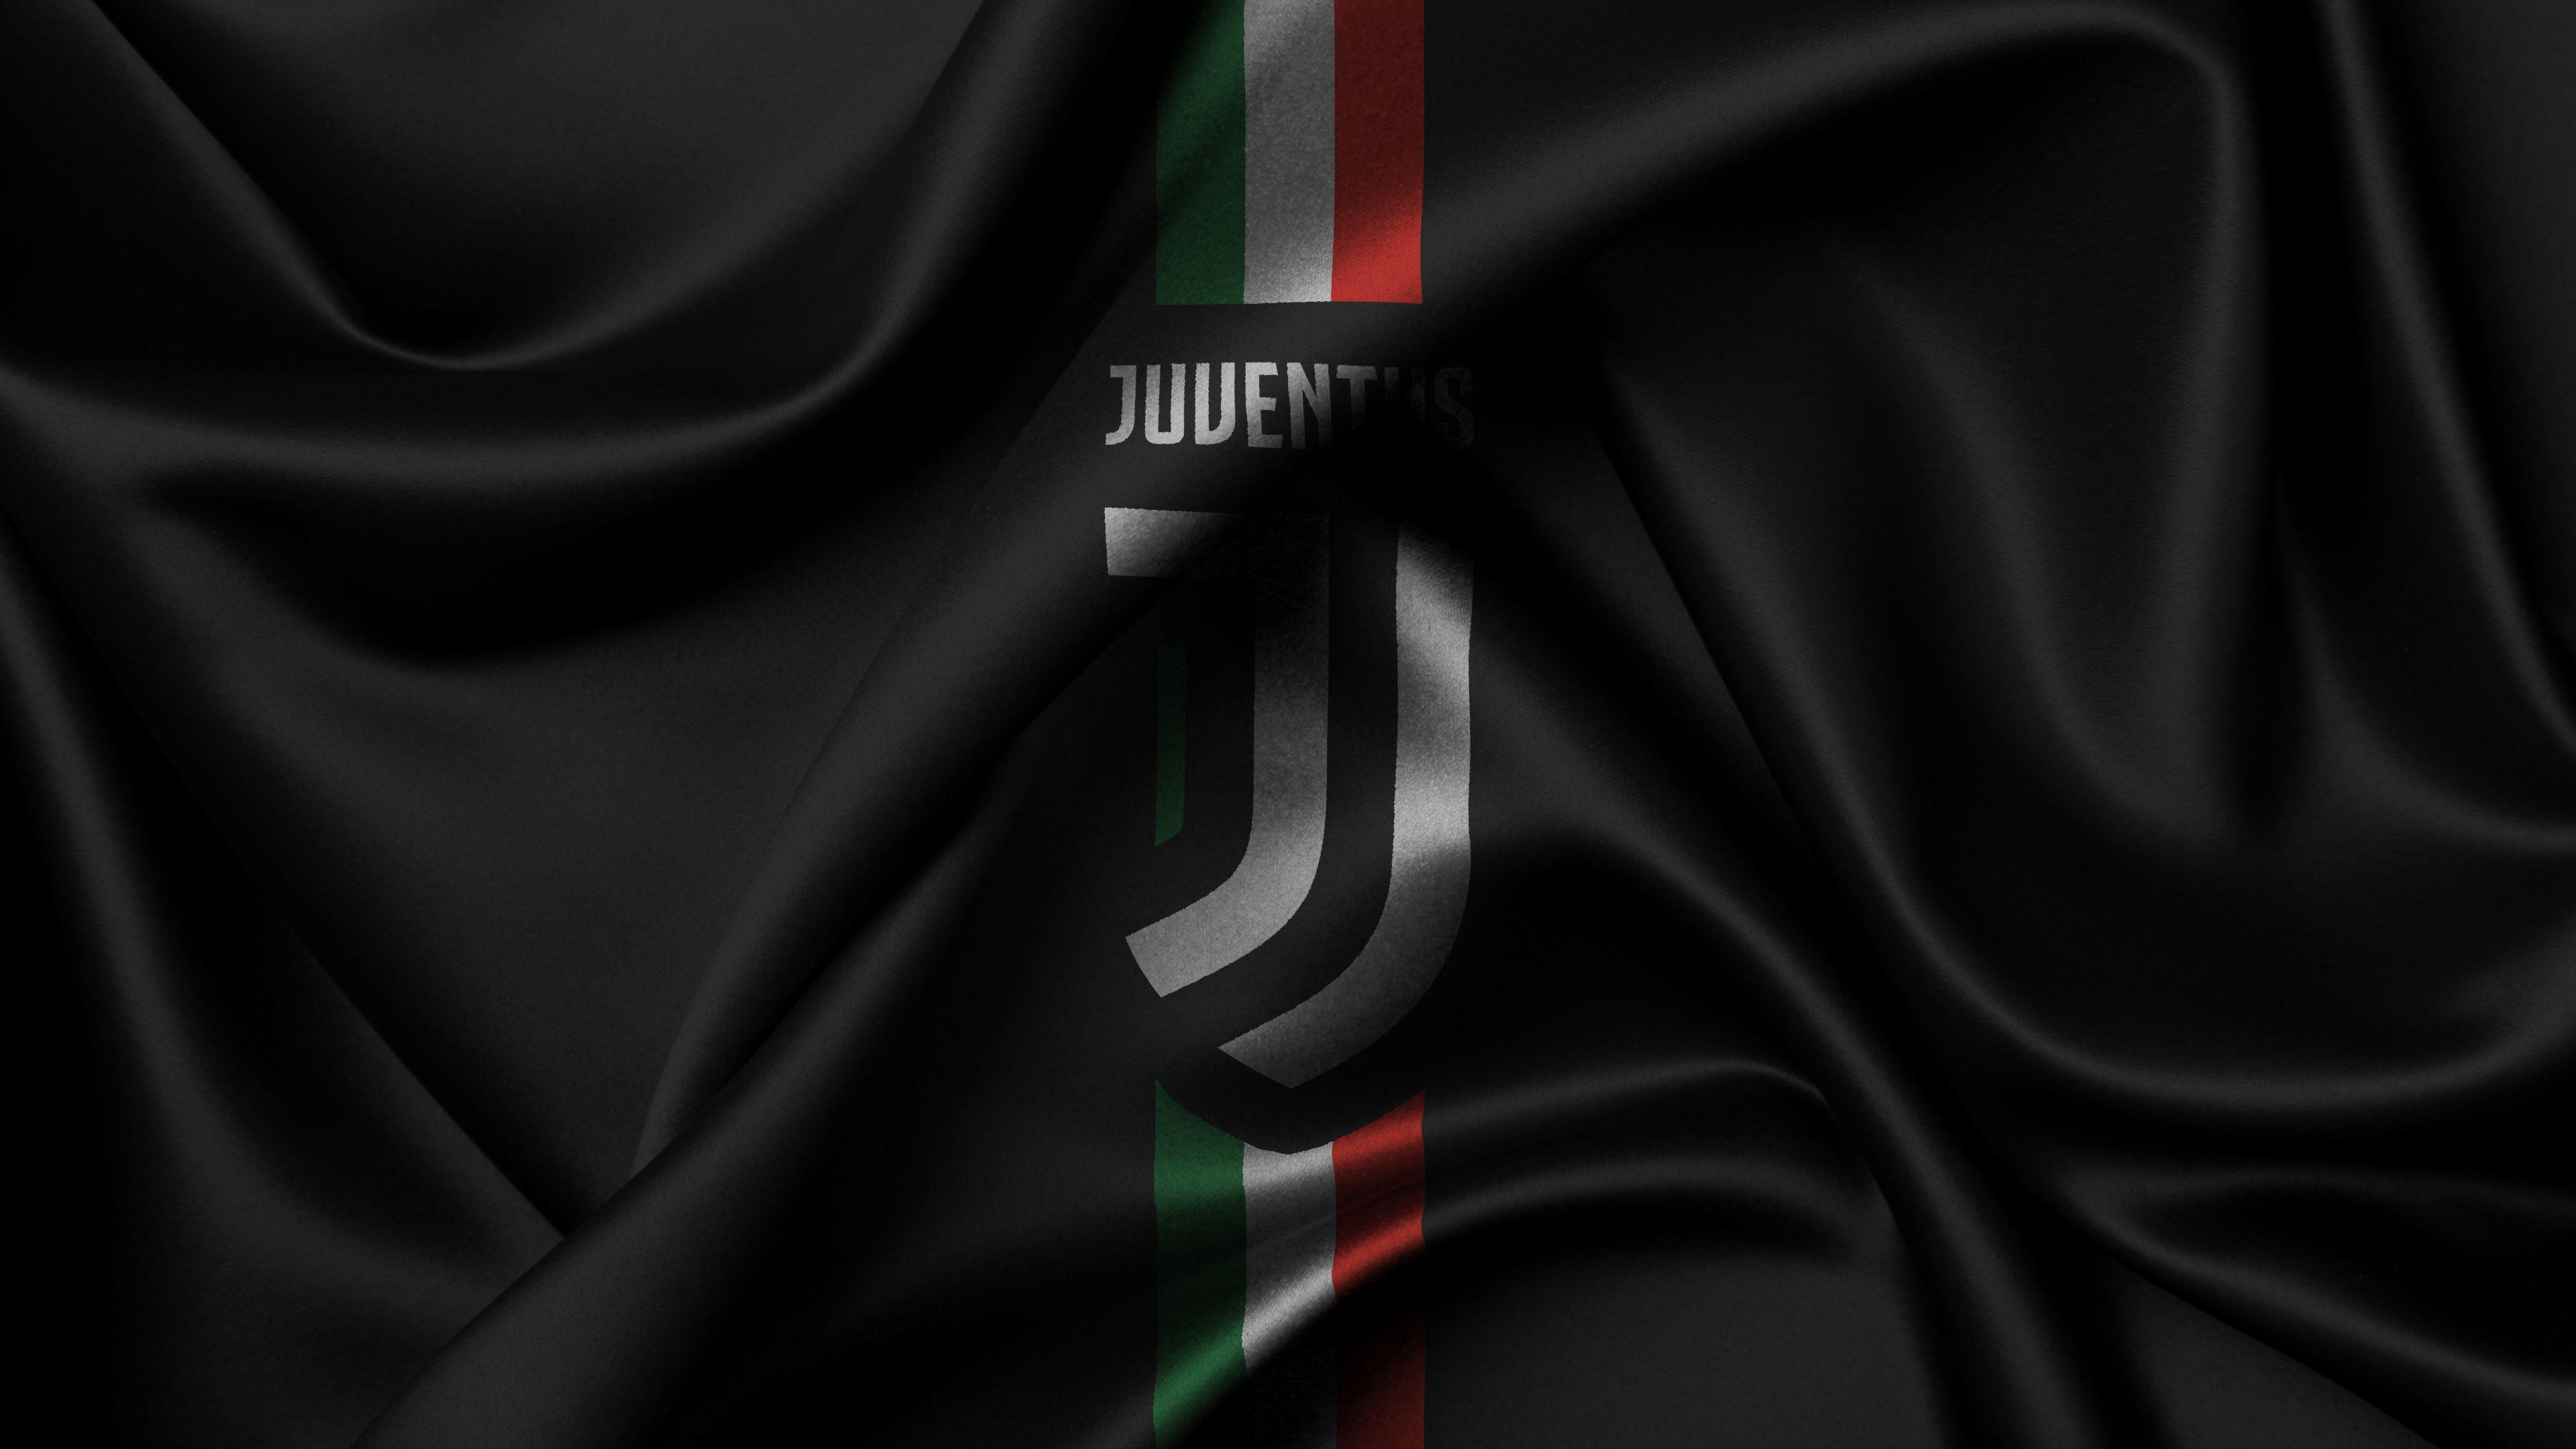 Download wallpaper Juventus, 4k, new logo, Serie A, Italy, football